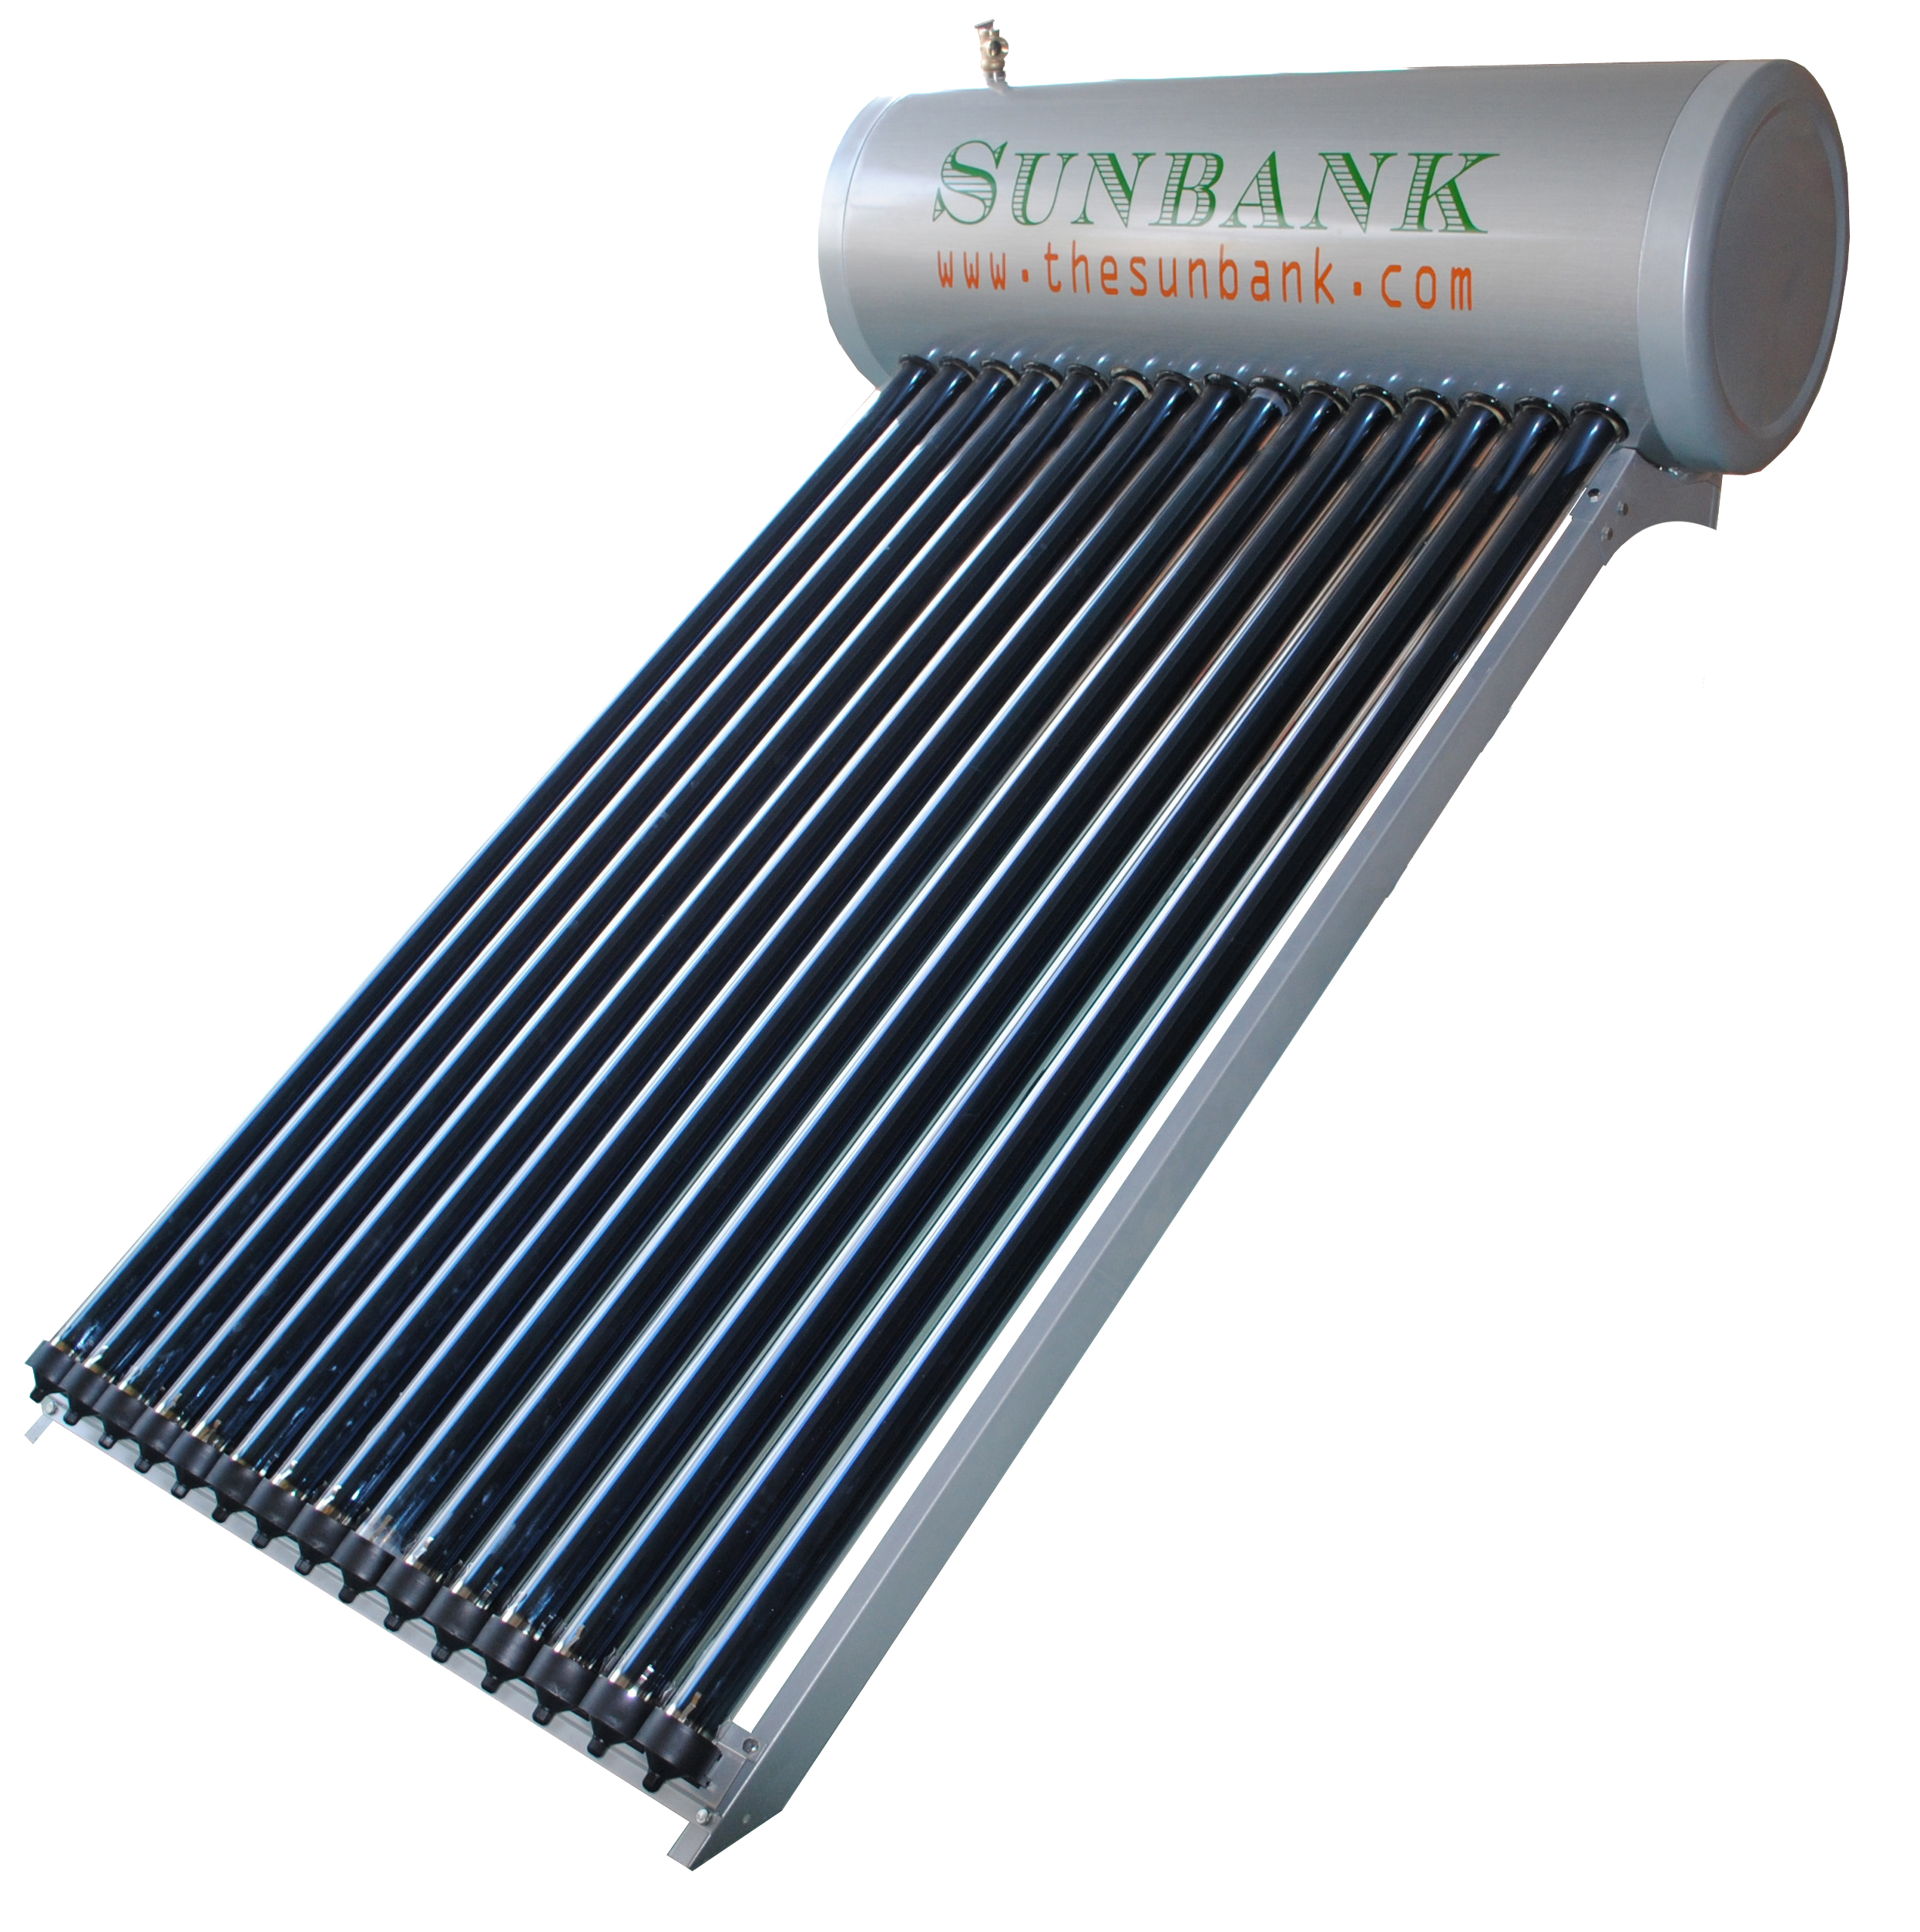 sunbank-40-gallon-solar-water-heater-srcc-certified-sunbank-solar